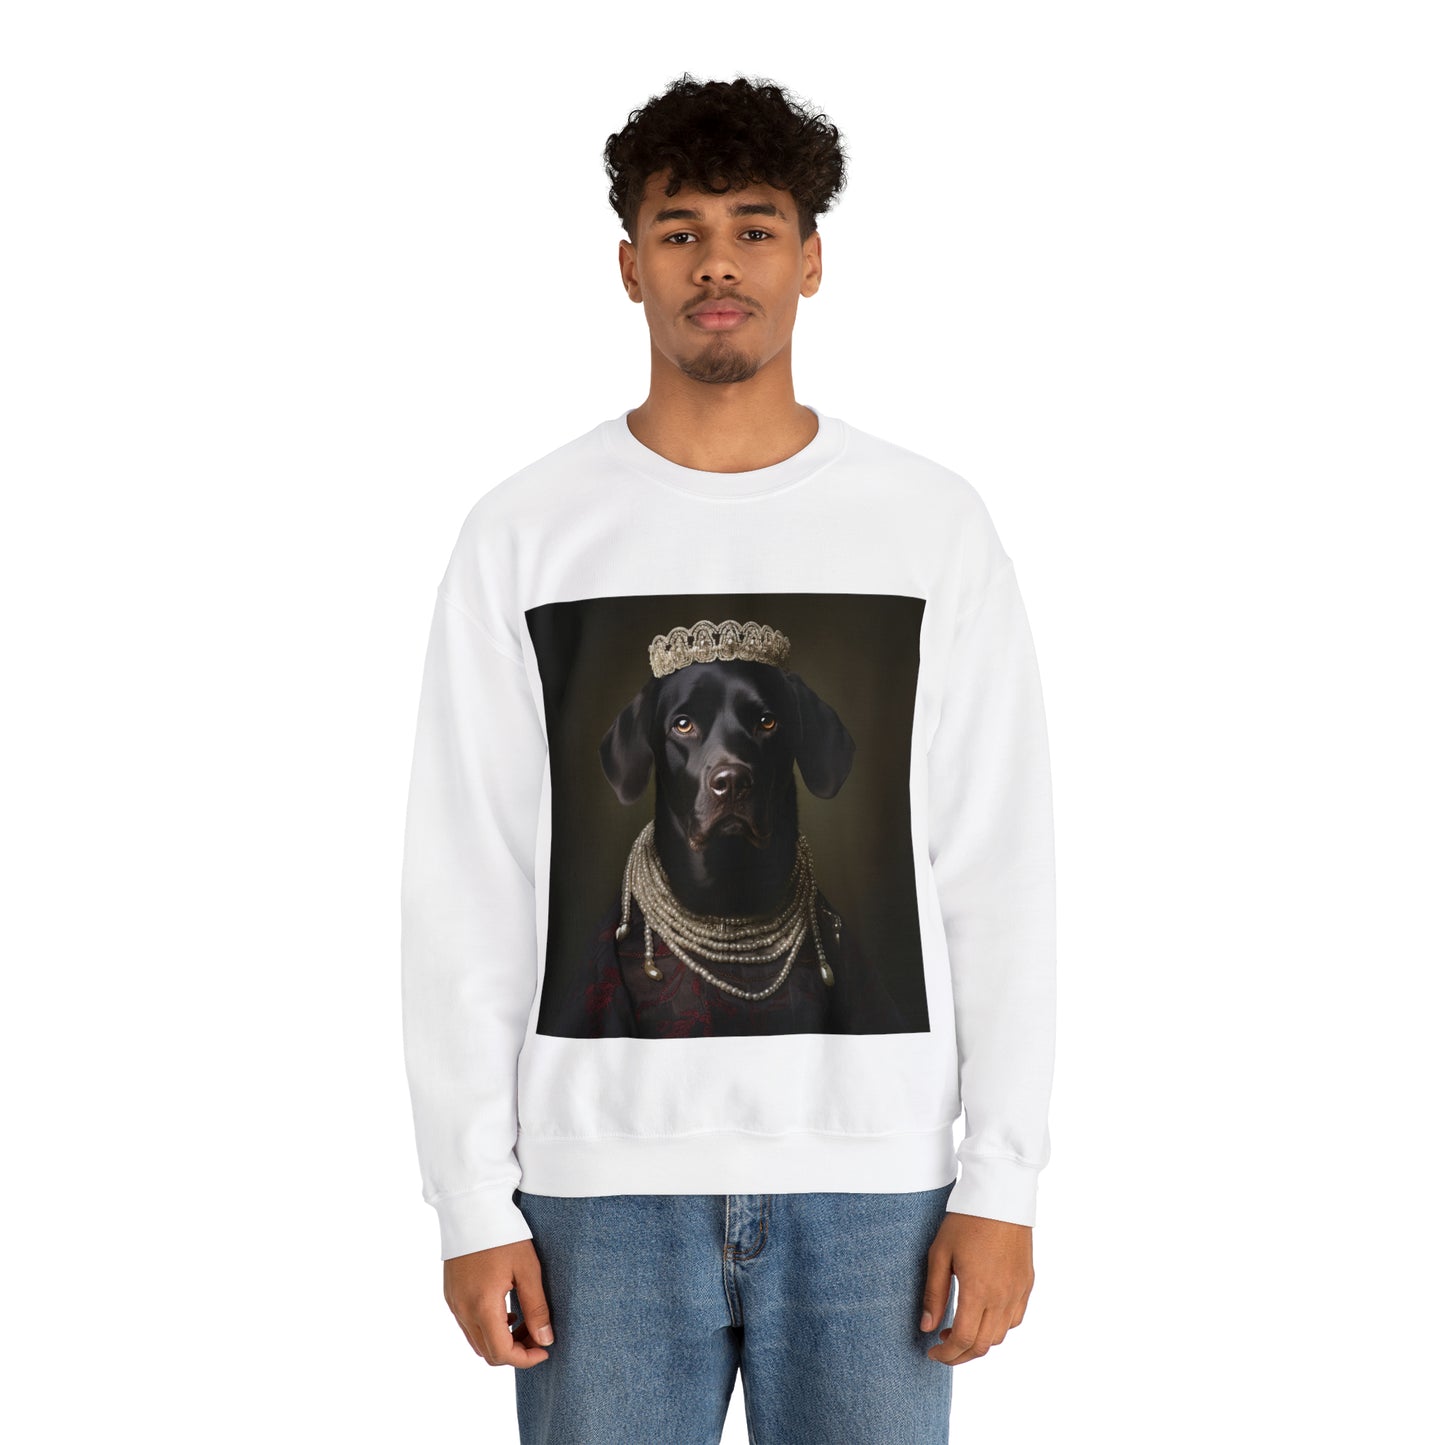 Black Lab - Victorian Era Woman of Nobility - Pet Portrait Unisex Crewneck Sweatshirt